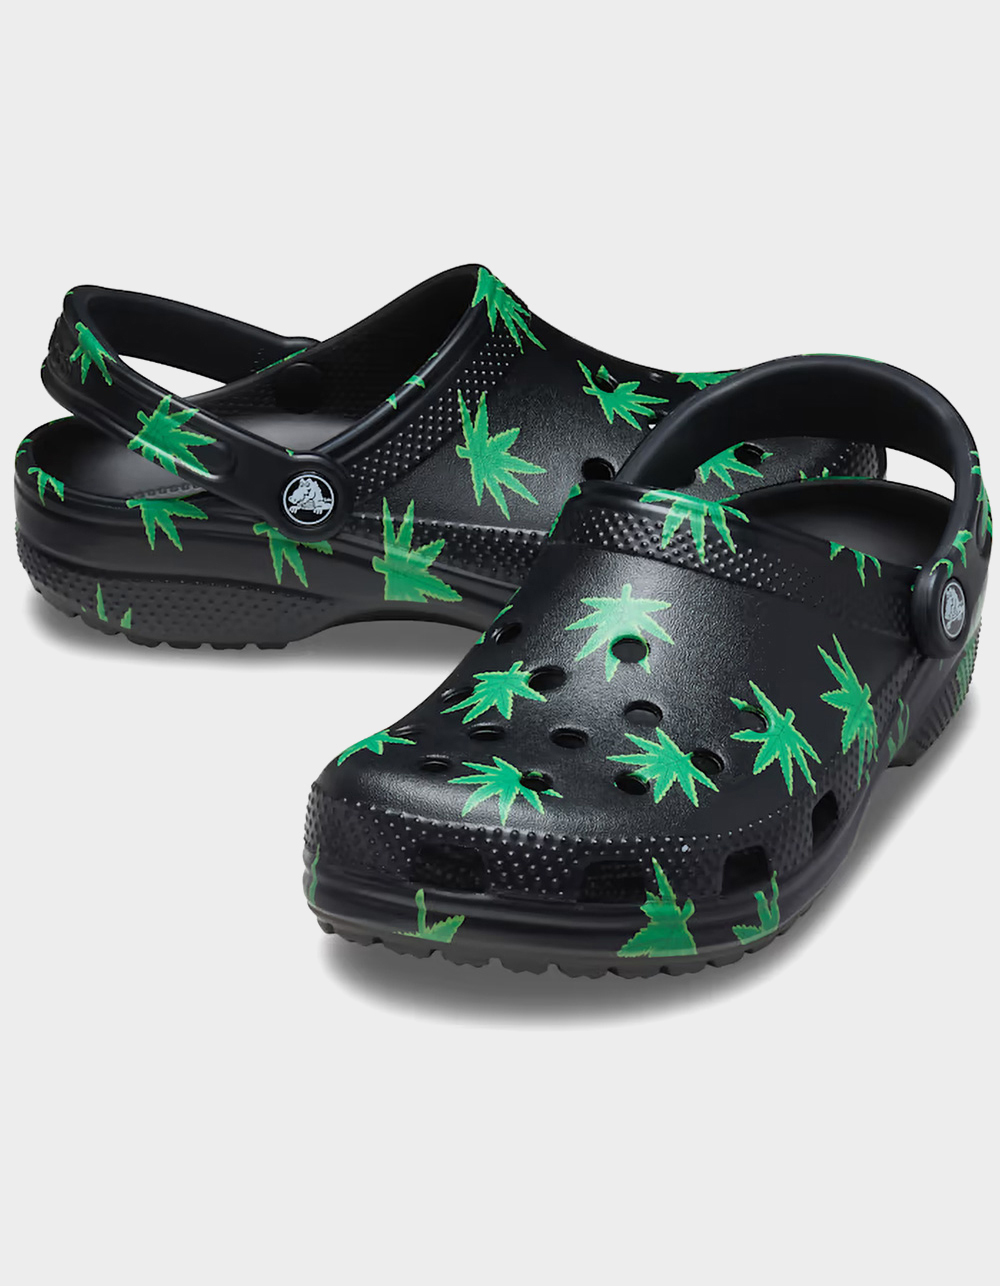 Hemp Leaf Jibbitz Shoe Charm - Crocs